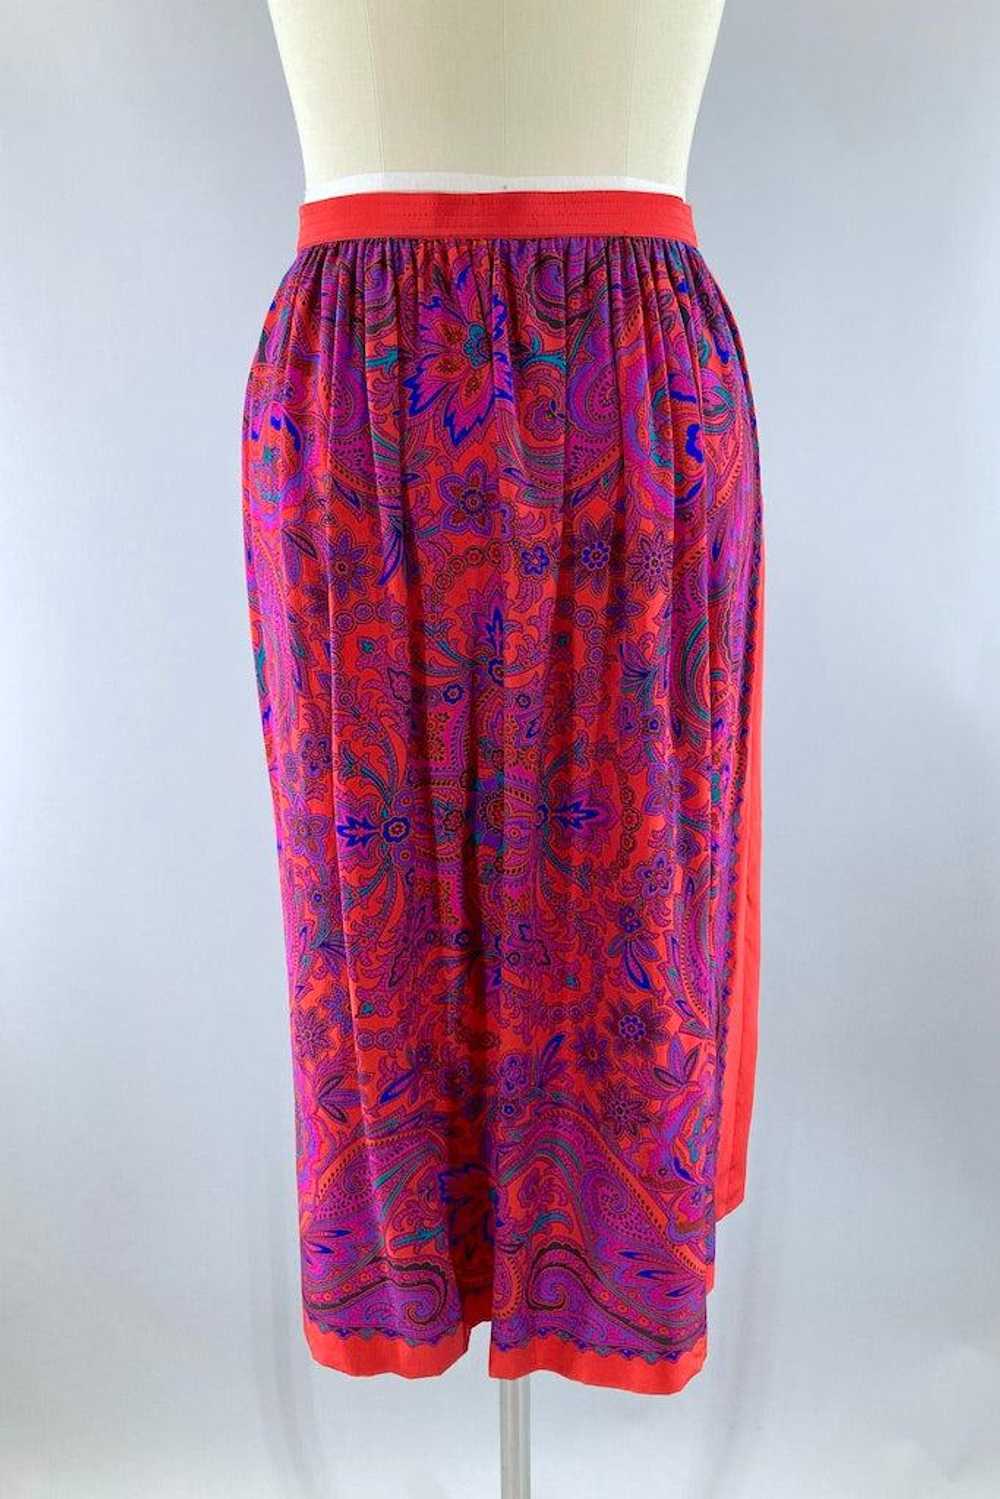 Vintage 80s Red & Purple Silk Skirt - image 5